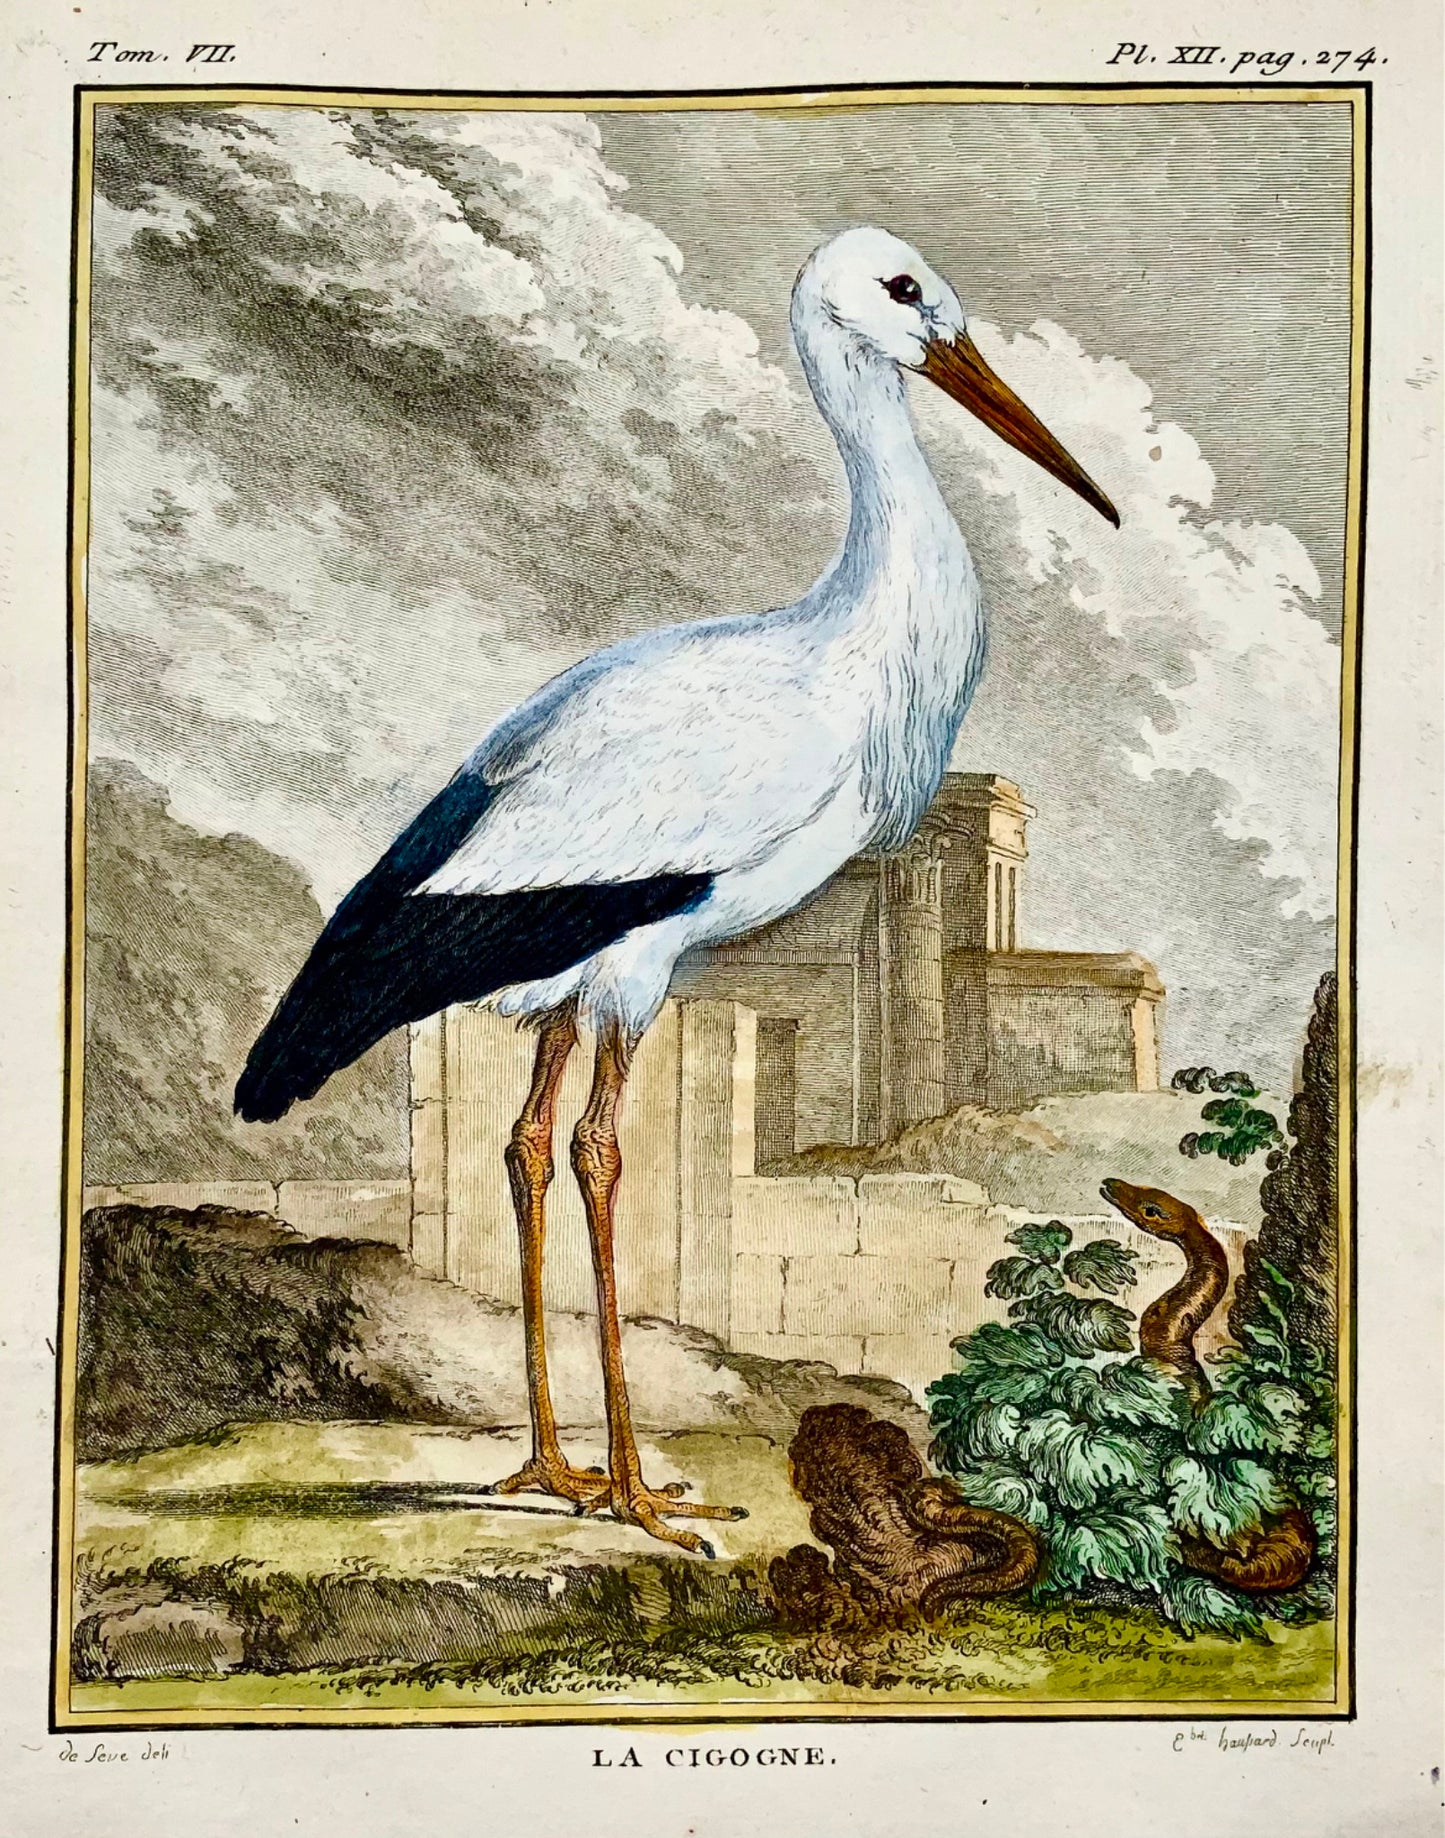 1779 de Seve - STORK Bird - Ornithology - 4to Large Edn engraving